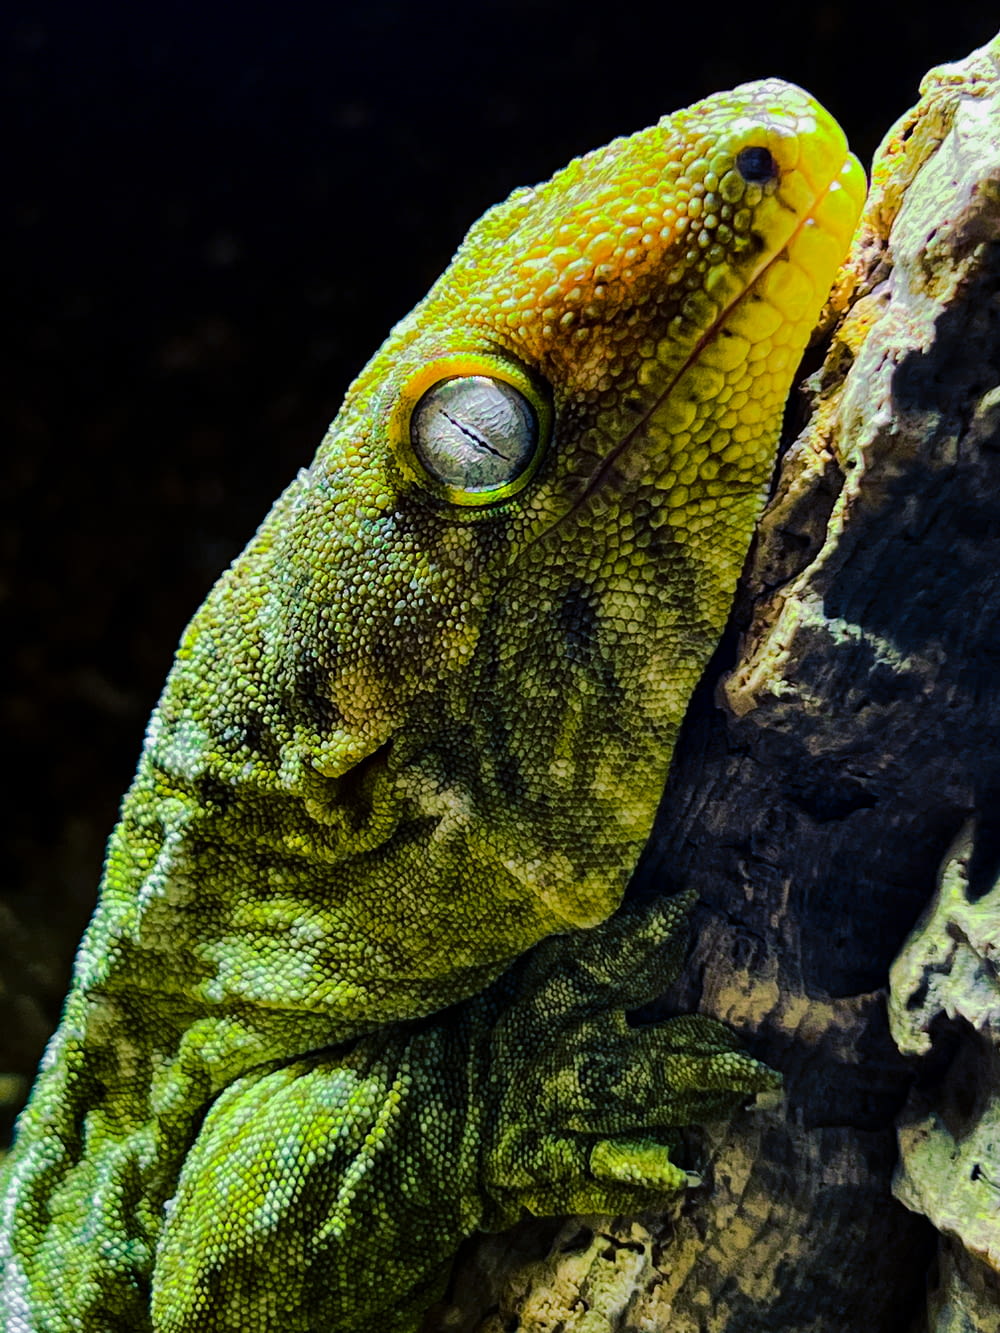 a close up of a lizard on a tree